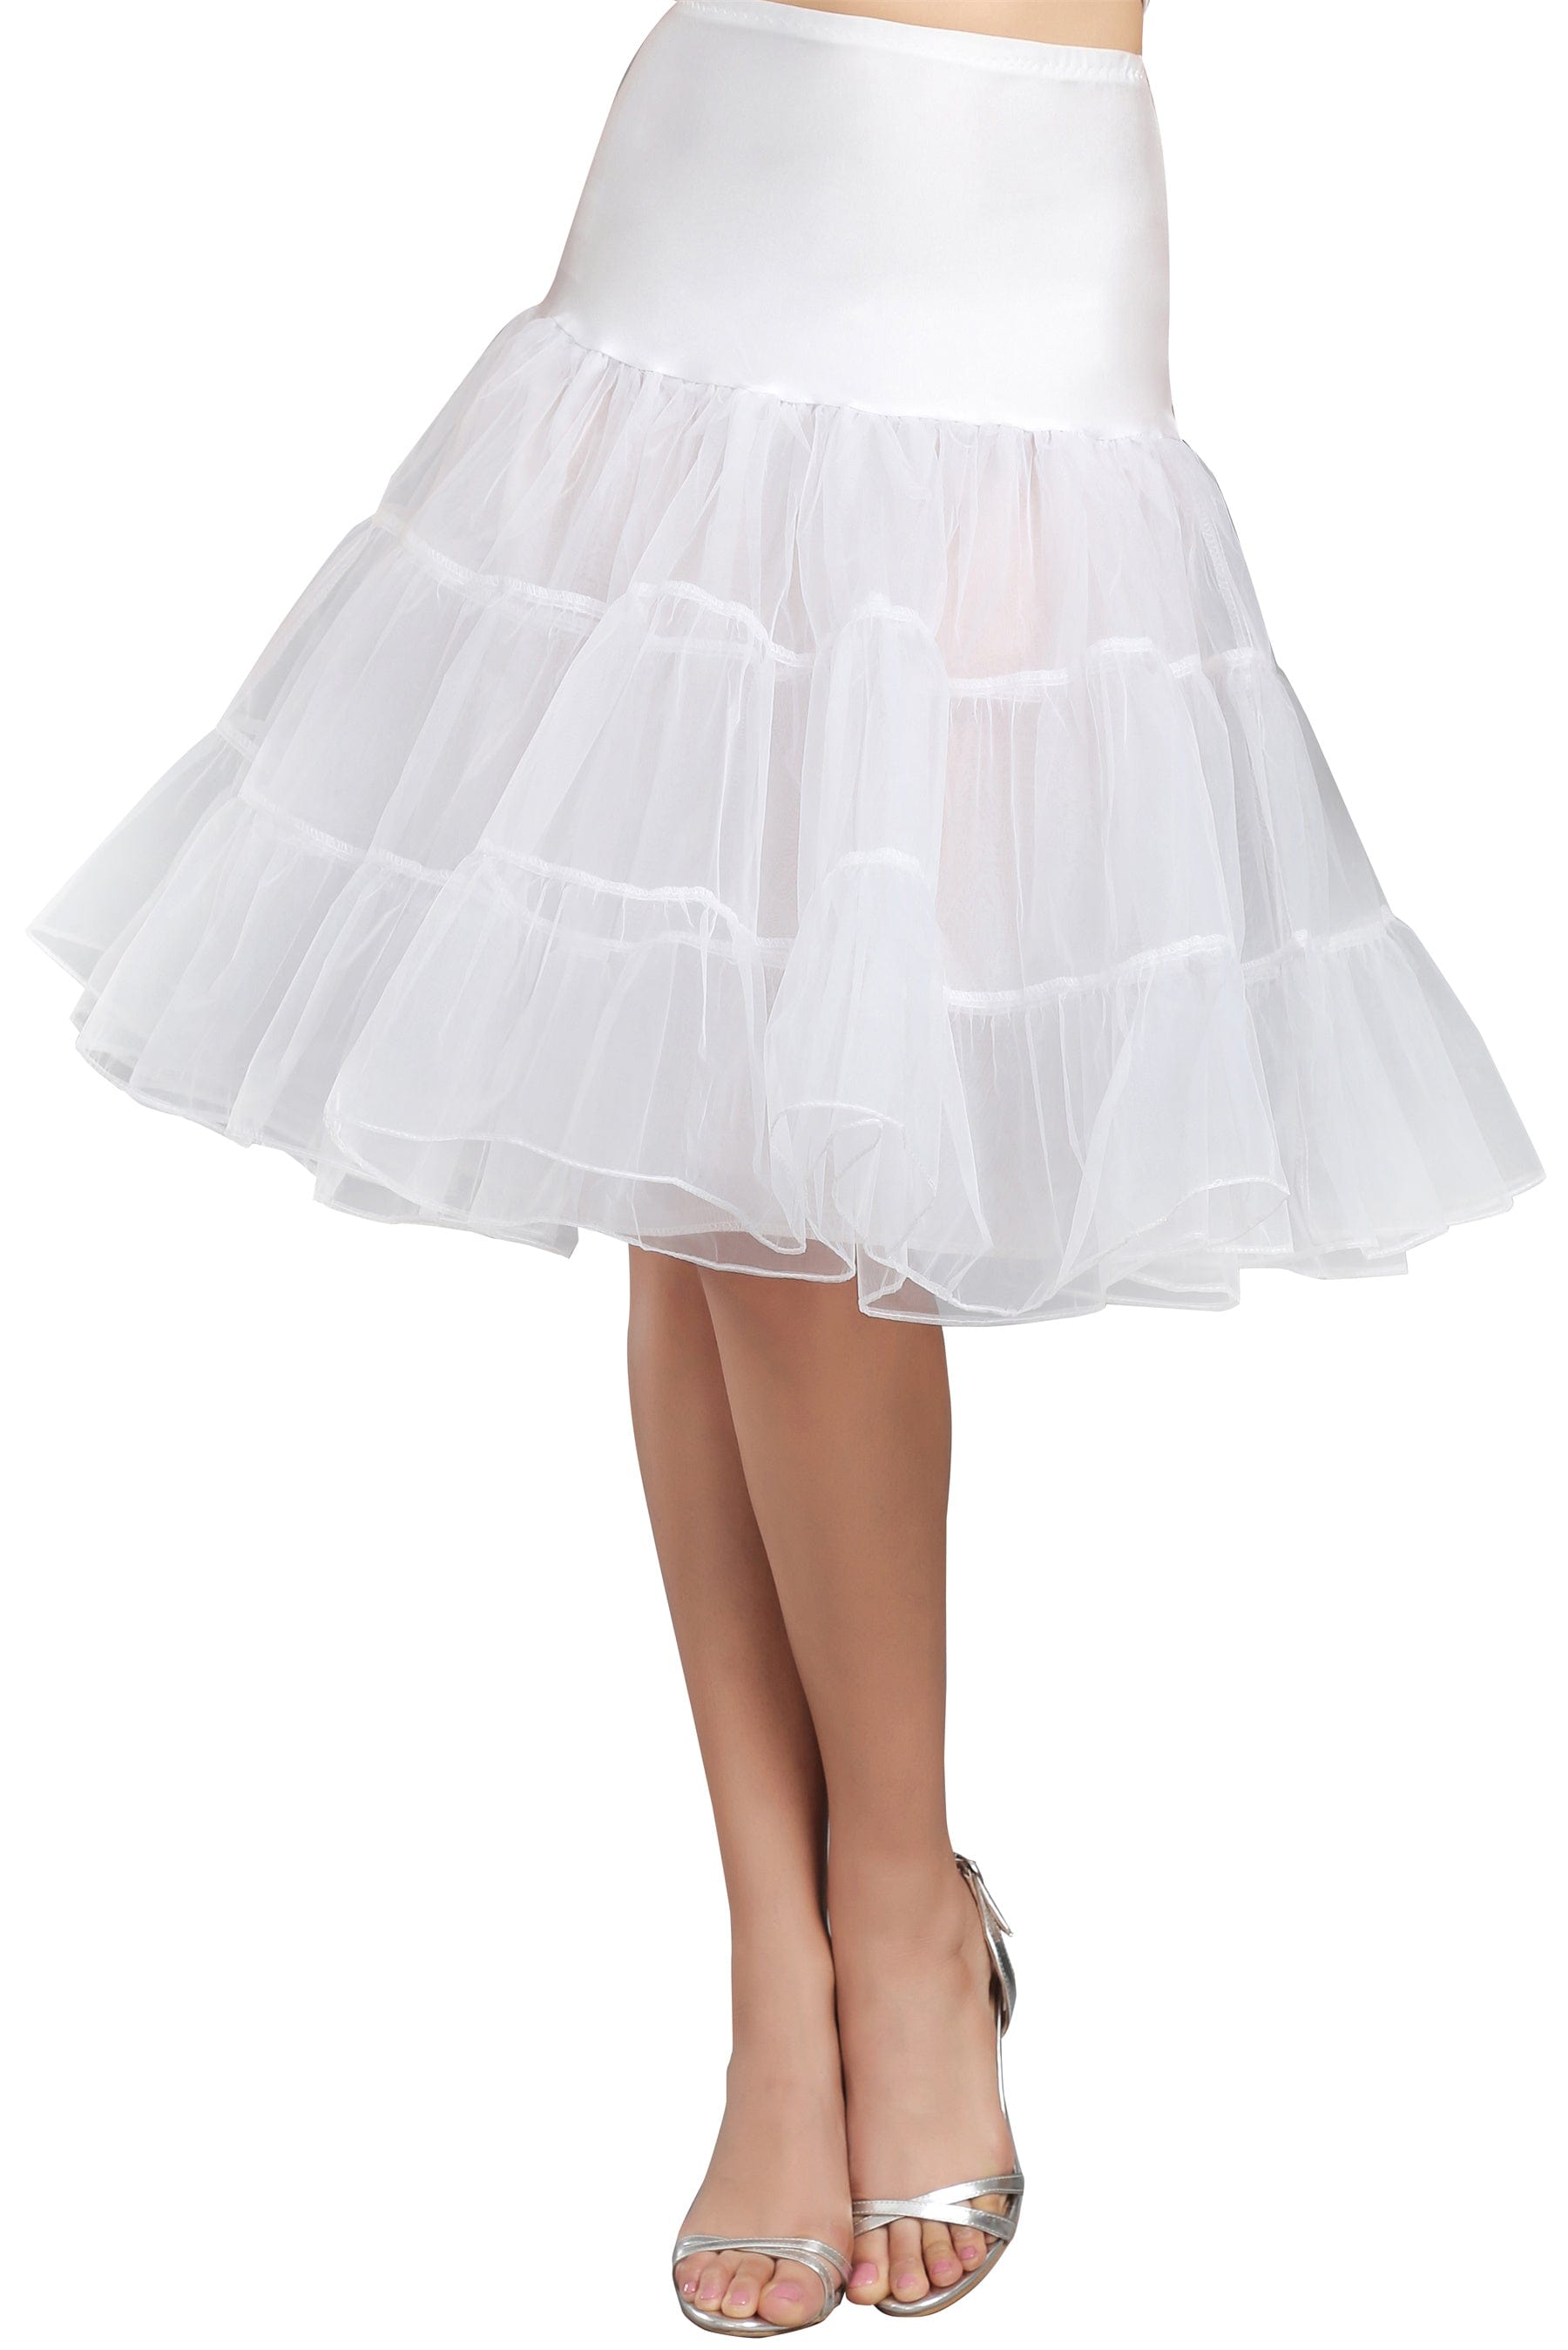 Versatile Tutu Ballet Parties Mini Dress